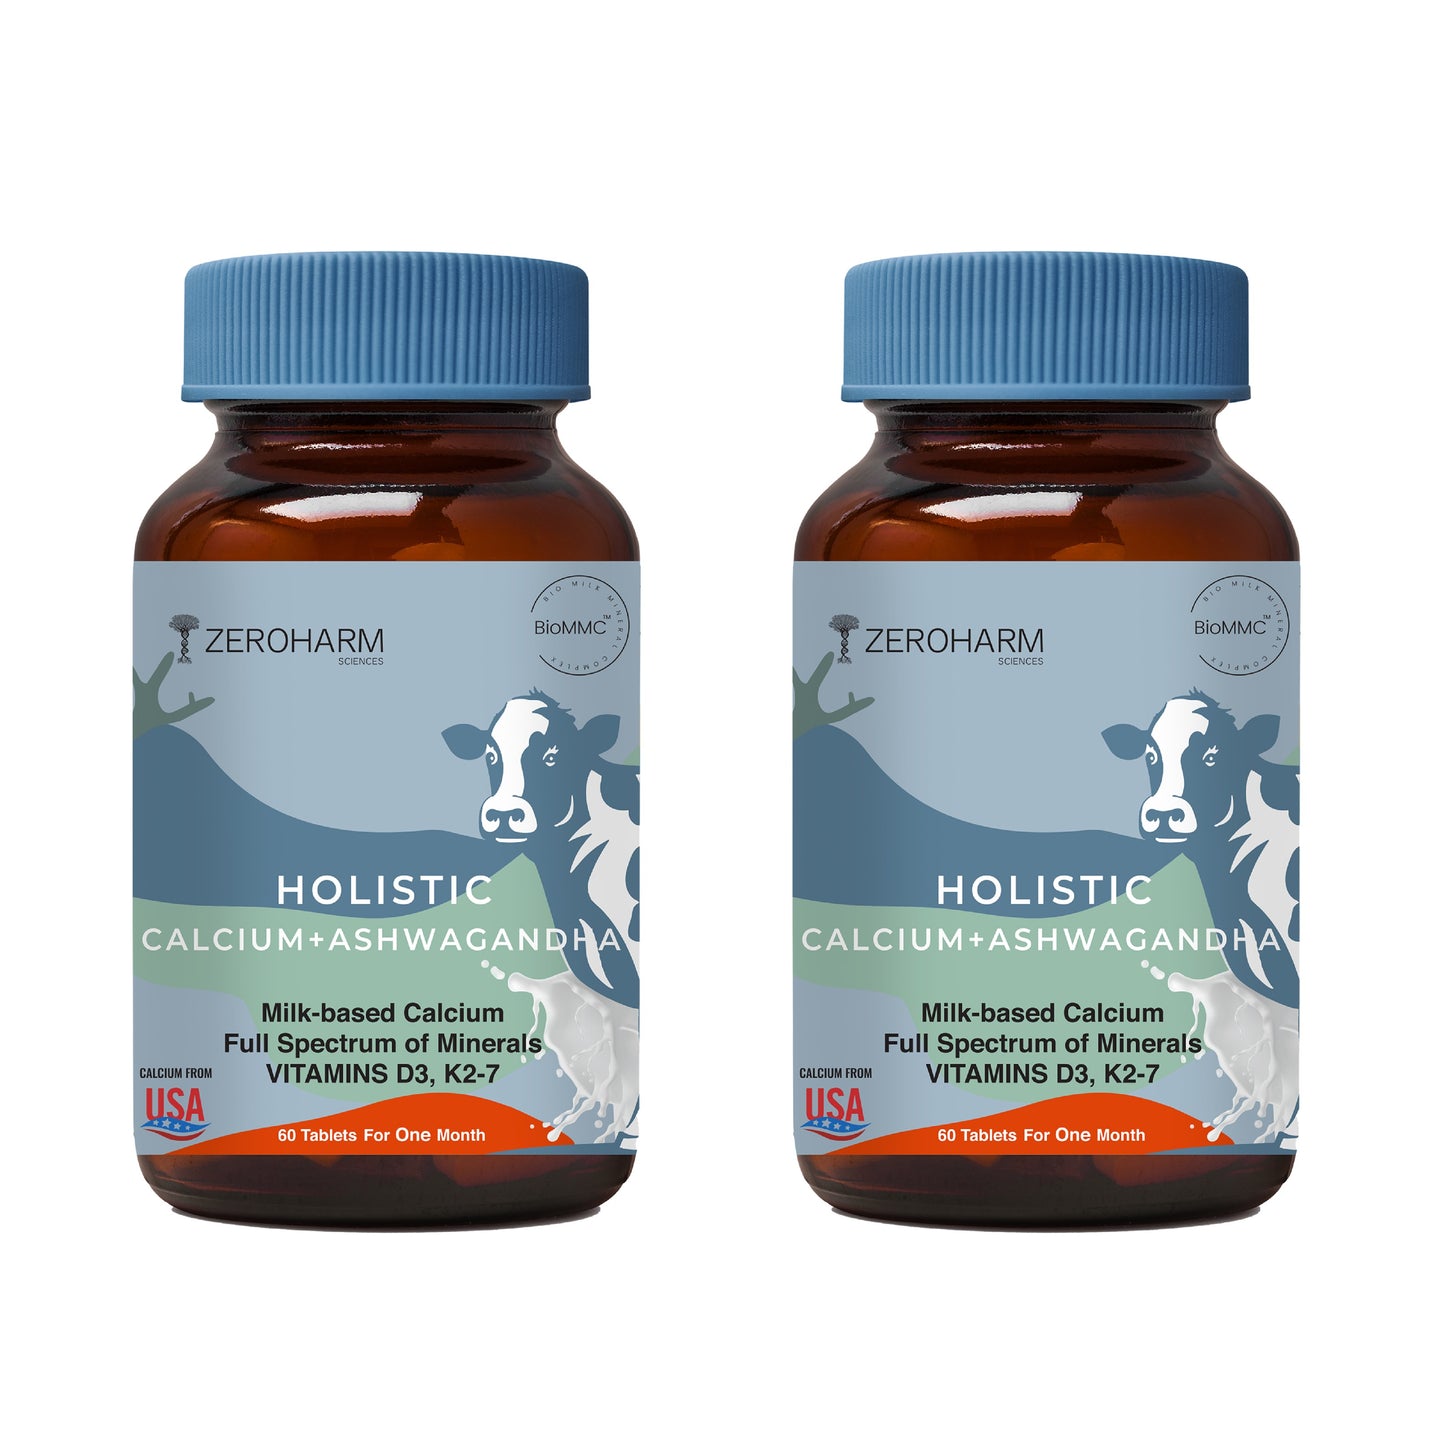 Holistic Calcium And Ashwagandha Tablets